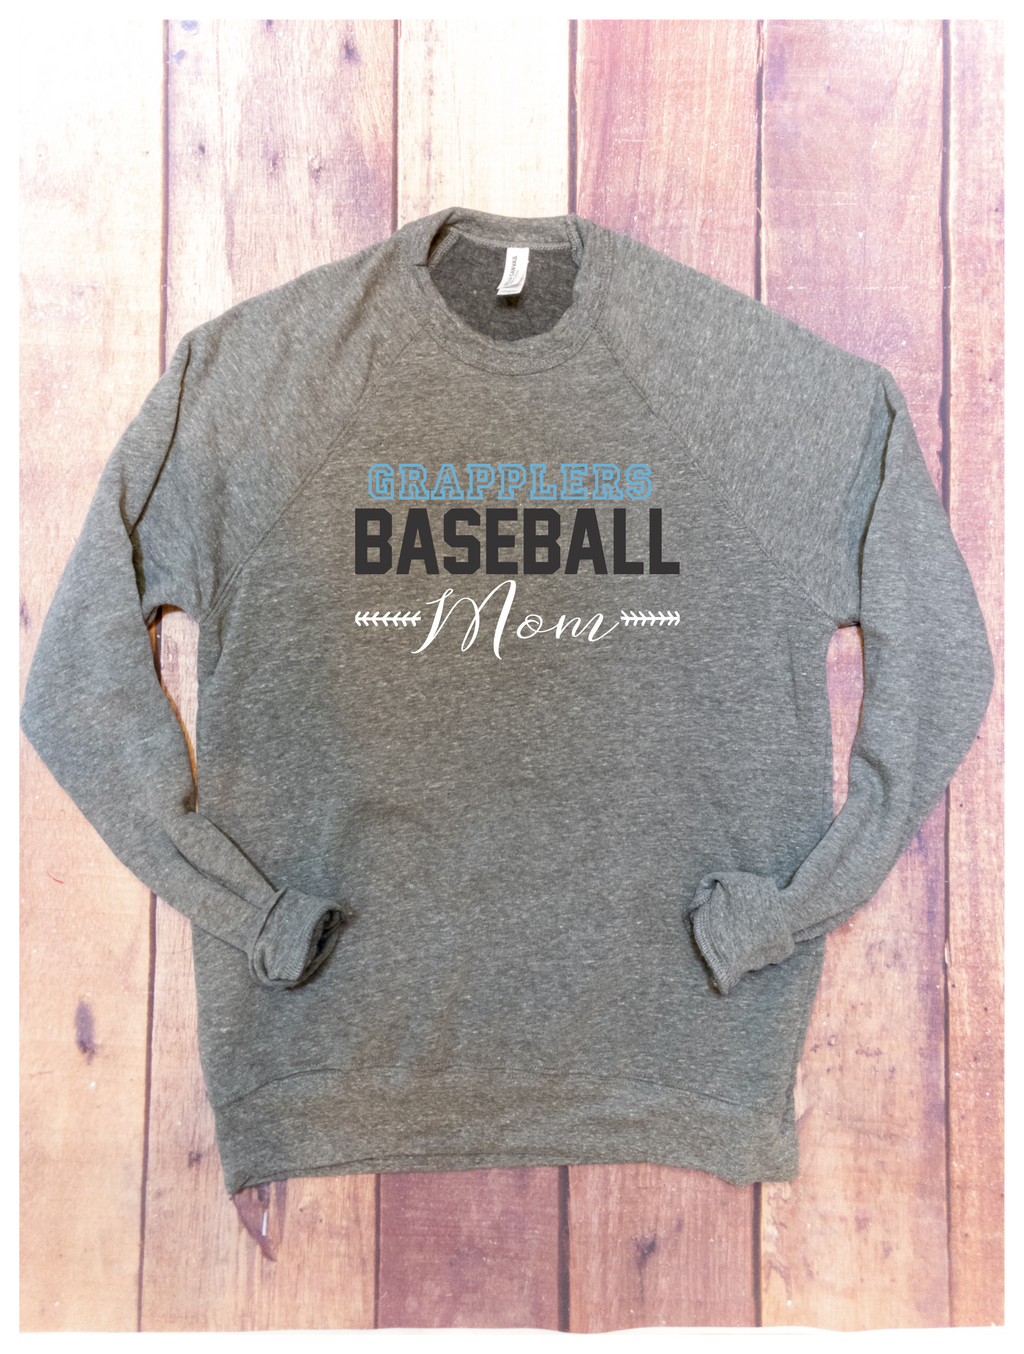 Grapplers Baseball Mom Crewneck Sweatshirt